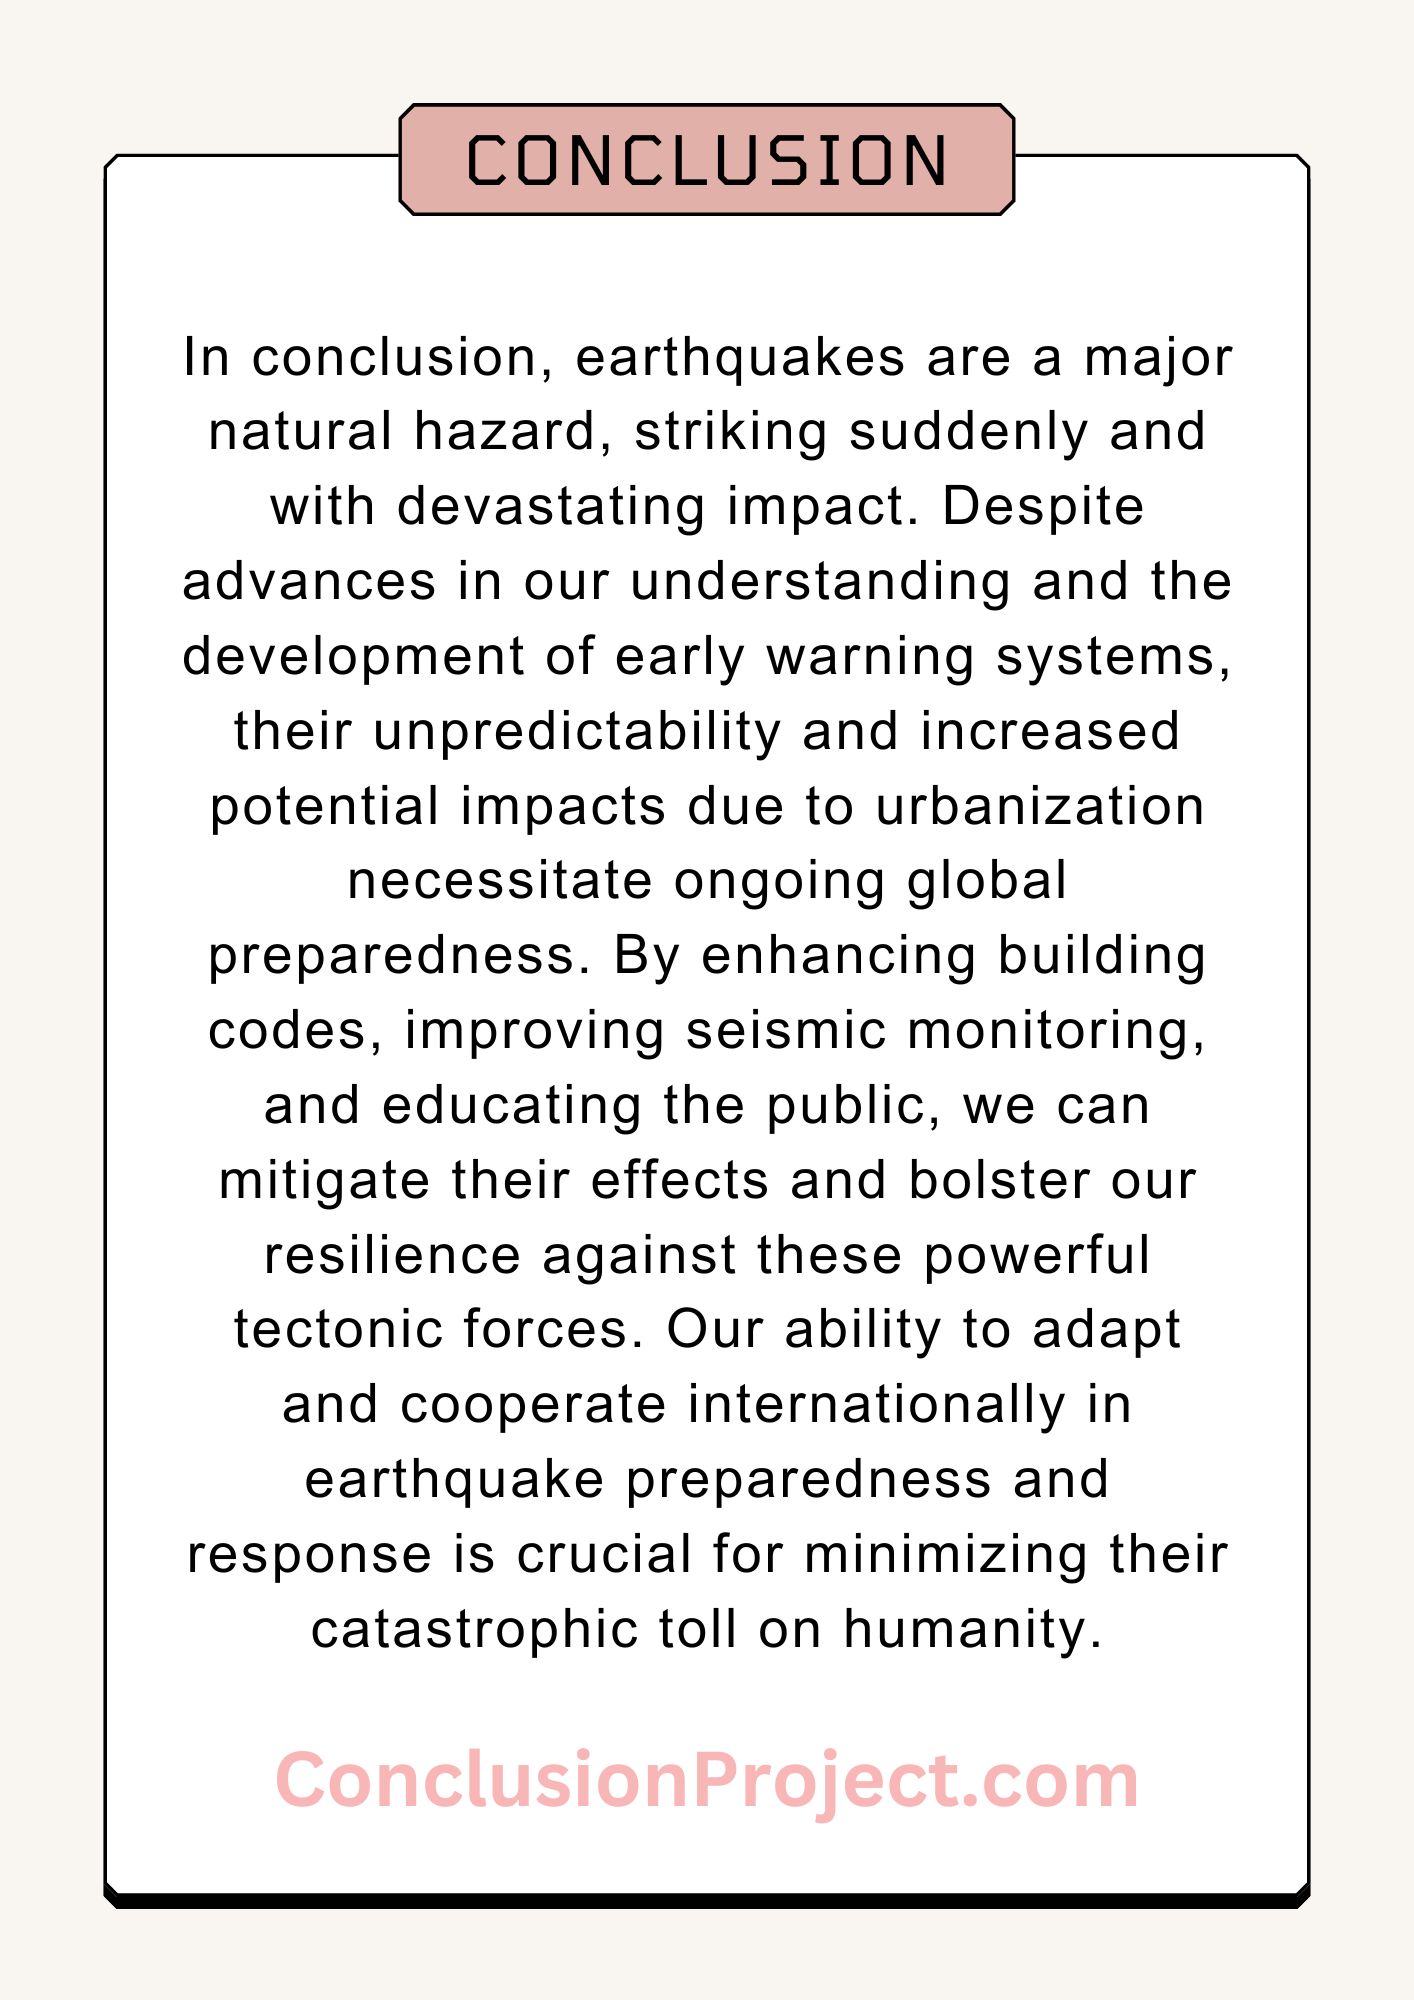 Conclusion of Earthquake